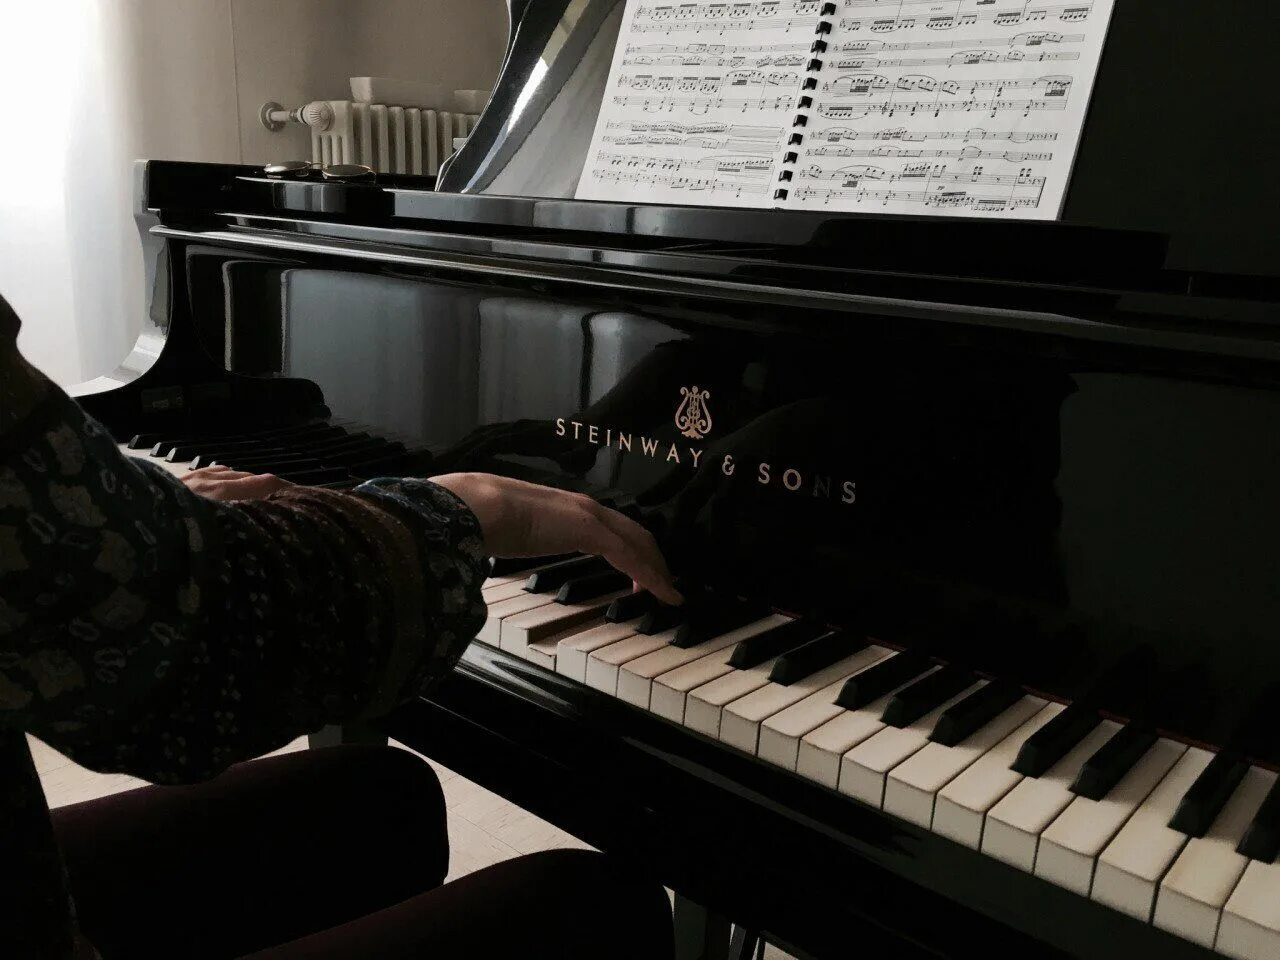 He plays the piano they. Рояль Рахманинова Bechstein. Фортепиано Эстетика. Композиции на пианино. Игра на пианино Эстетика.